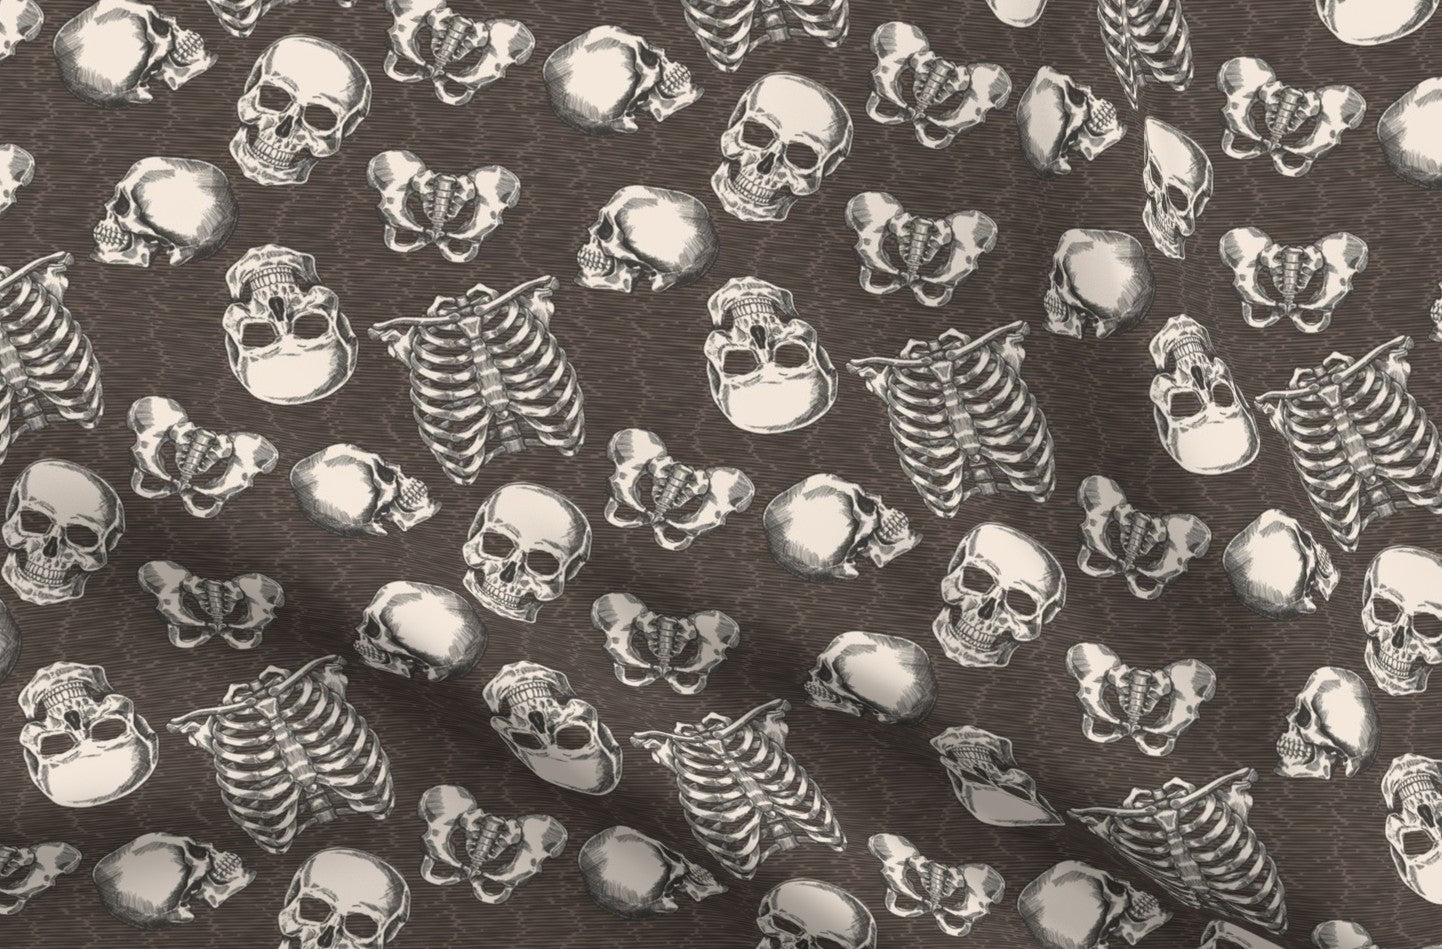 Dem Bones (Sepia) Printed Fabric by Studio Ten Design